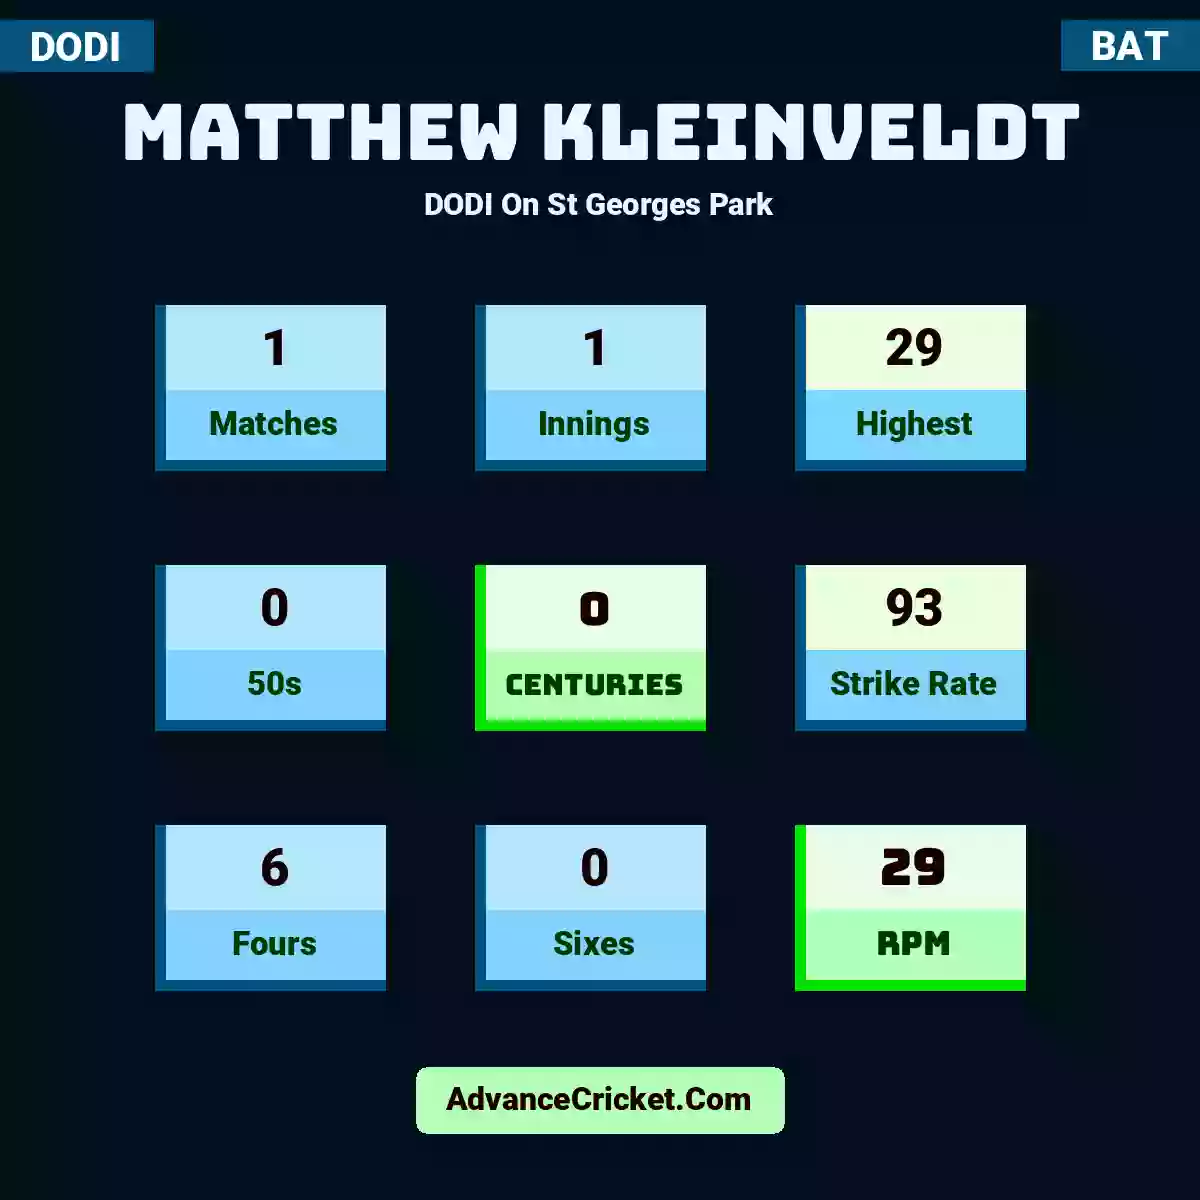 Matthew Kleinveldt DODI  On St Georges Park, Matthew Kleinveldt played 1 matches, scored 29 runs as highest, 0 half-centuries, and 0 centuries, with a strike rate of 93. M.Kleinveldt hit 6 fours and 0 sixes, with an RPM of 29.